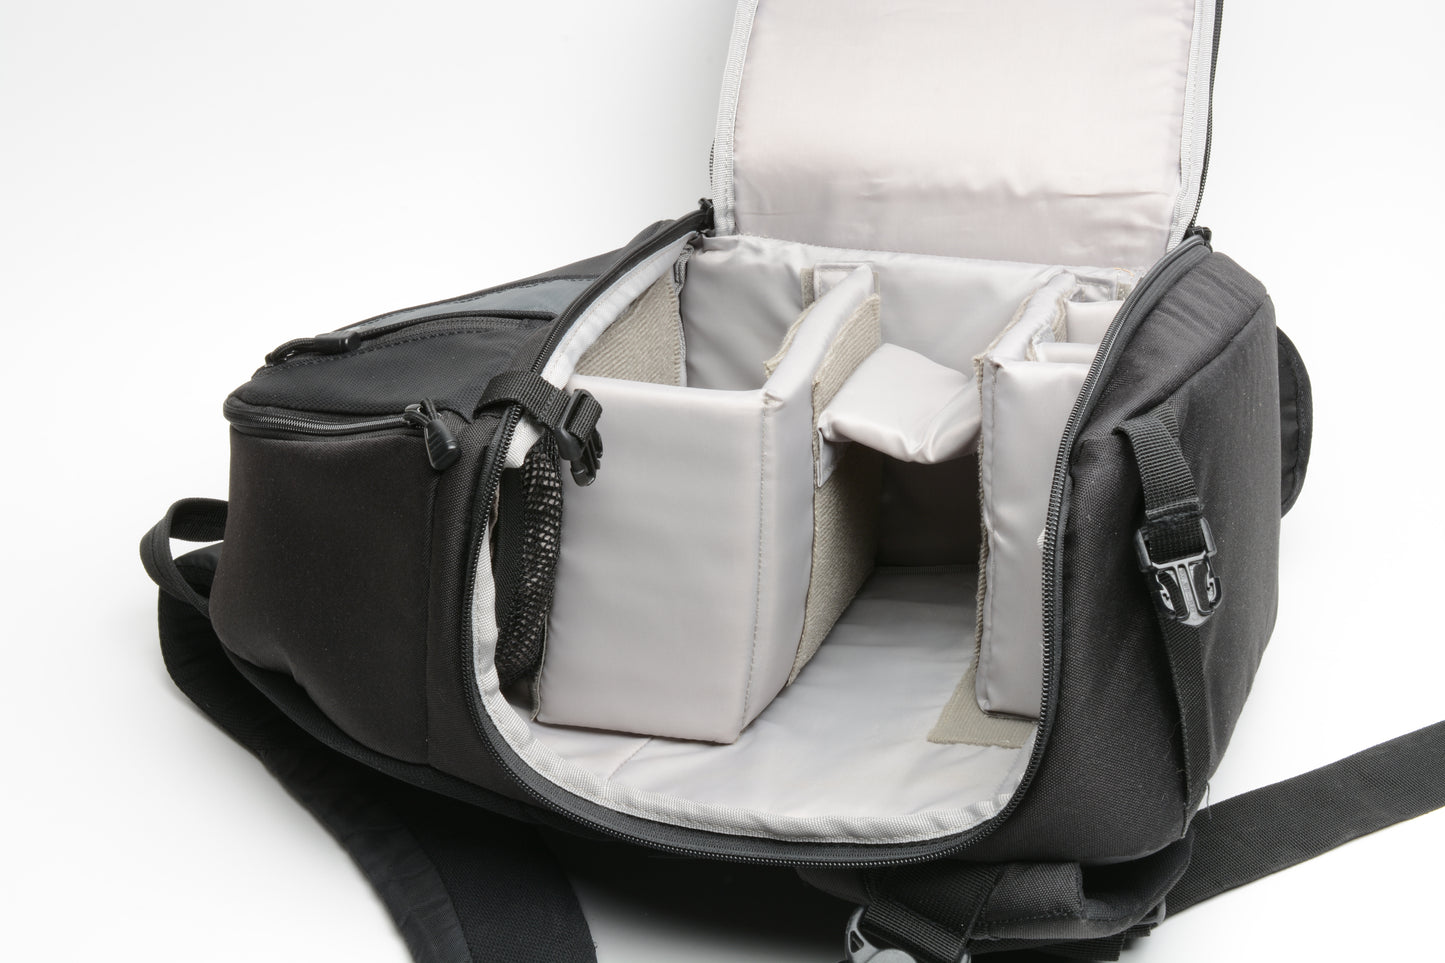 Lowepro SlingShot 302 AW camera sling bag, nice & clean, gently used